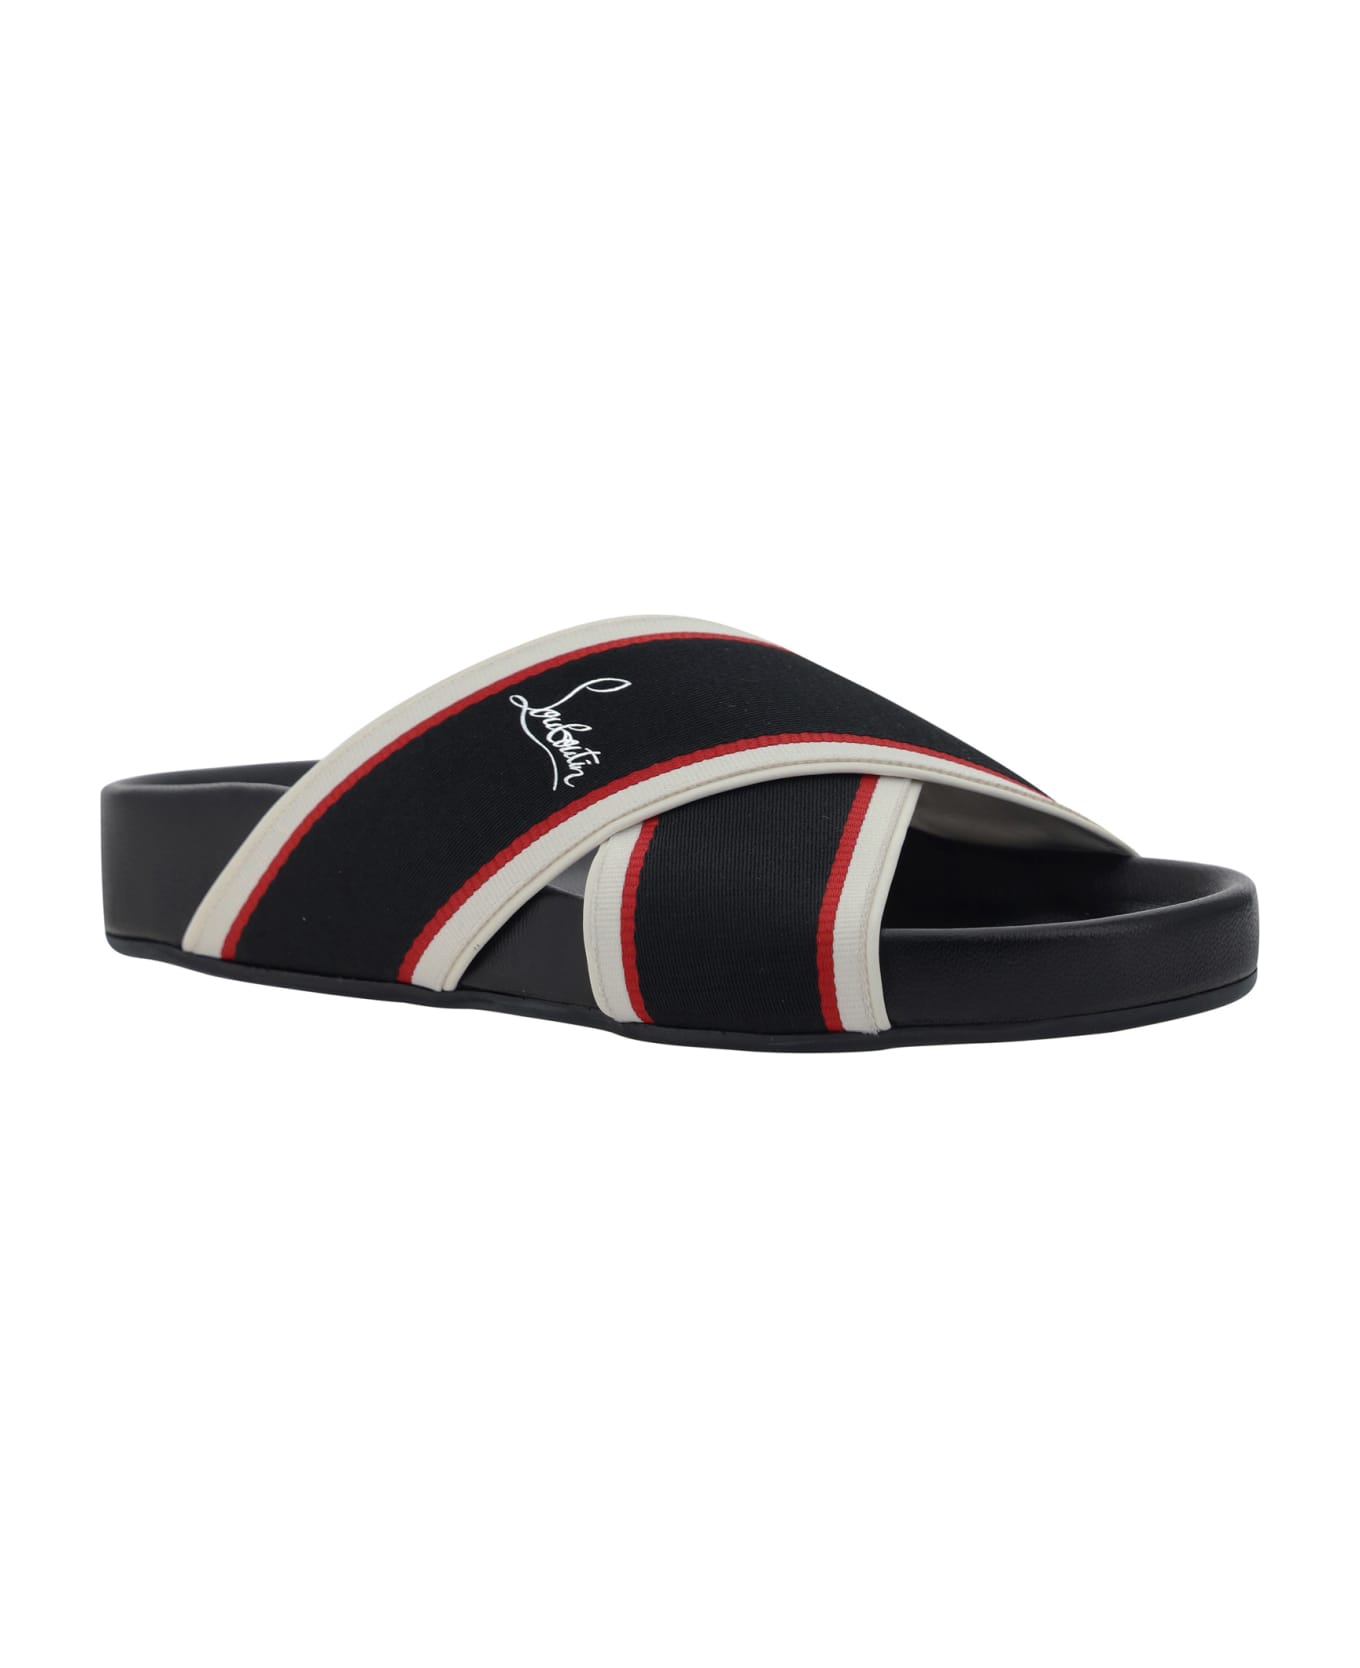 Kyrie Louboutin Hot Cross Bizz Sandals - Black